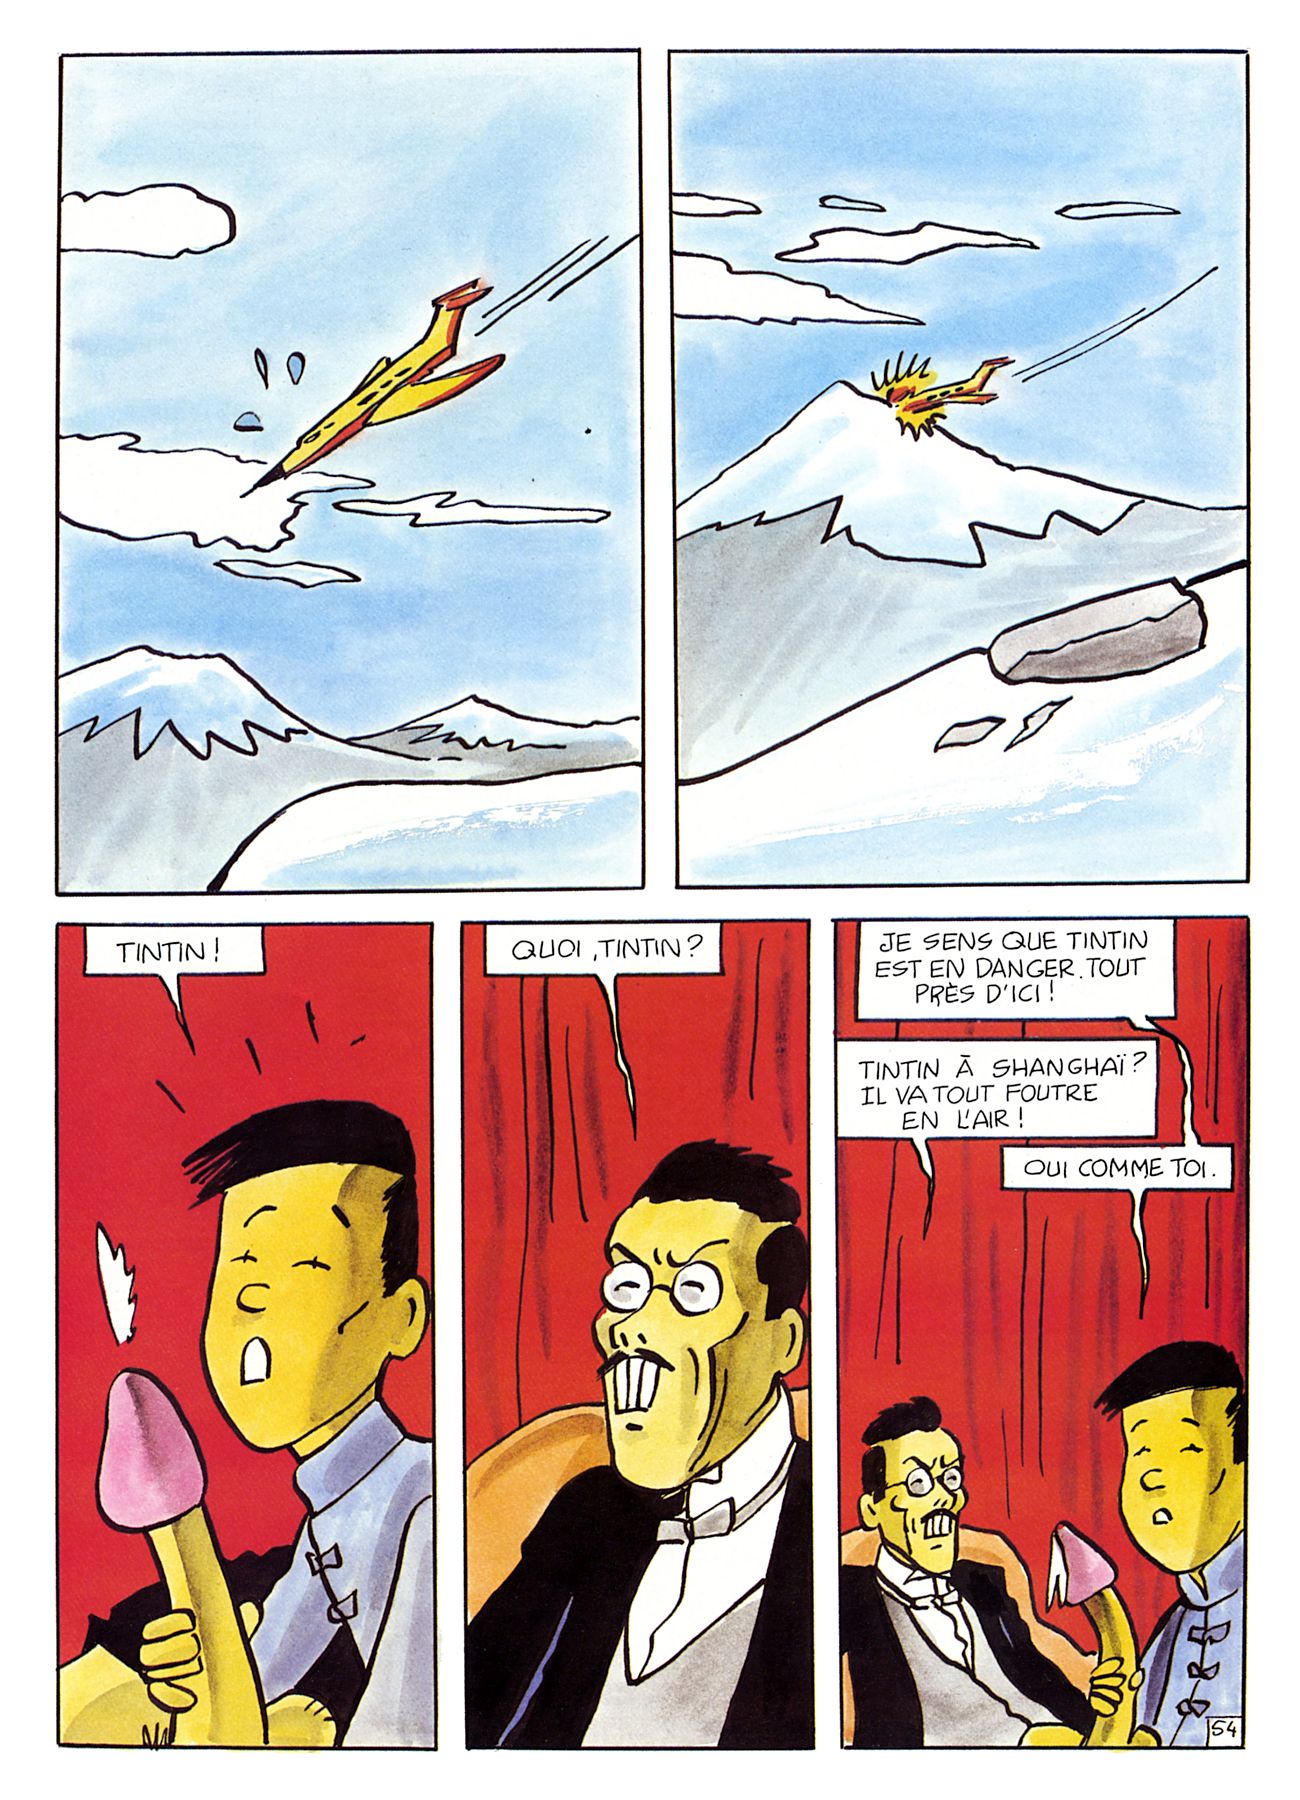 La-Vie-Sexuelle-De-Tintin-1992-All-64-pages-French-page54--Gotofap.tk--81987740.jpg